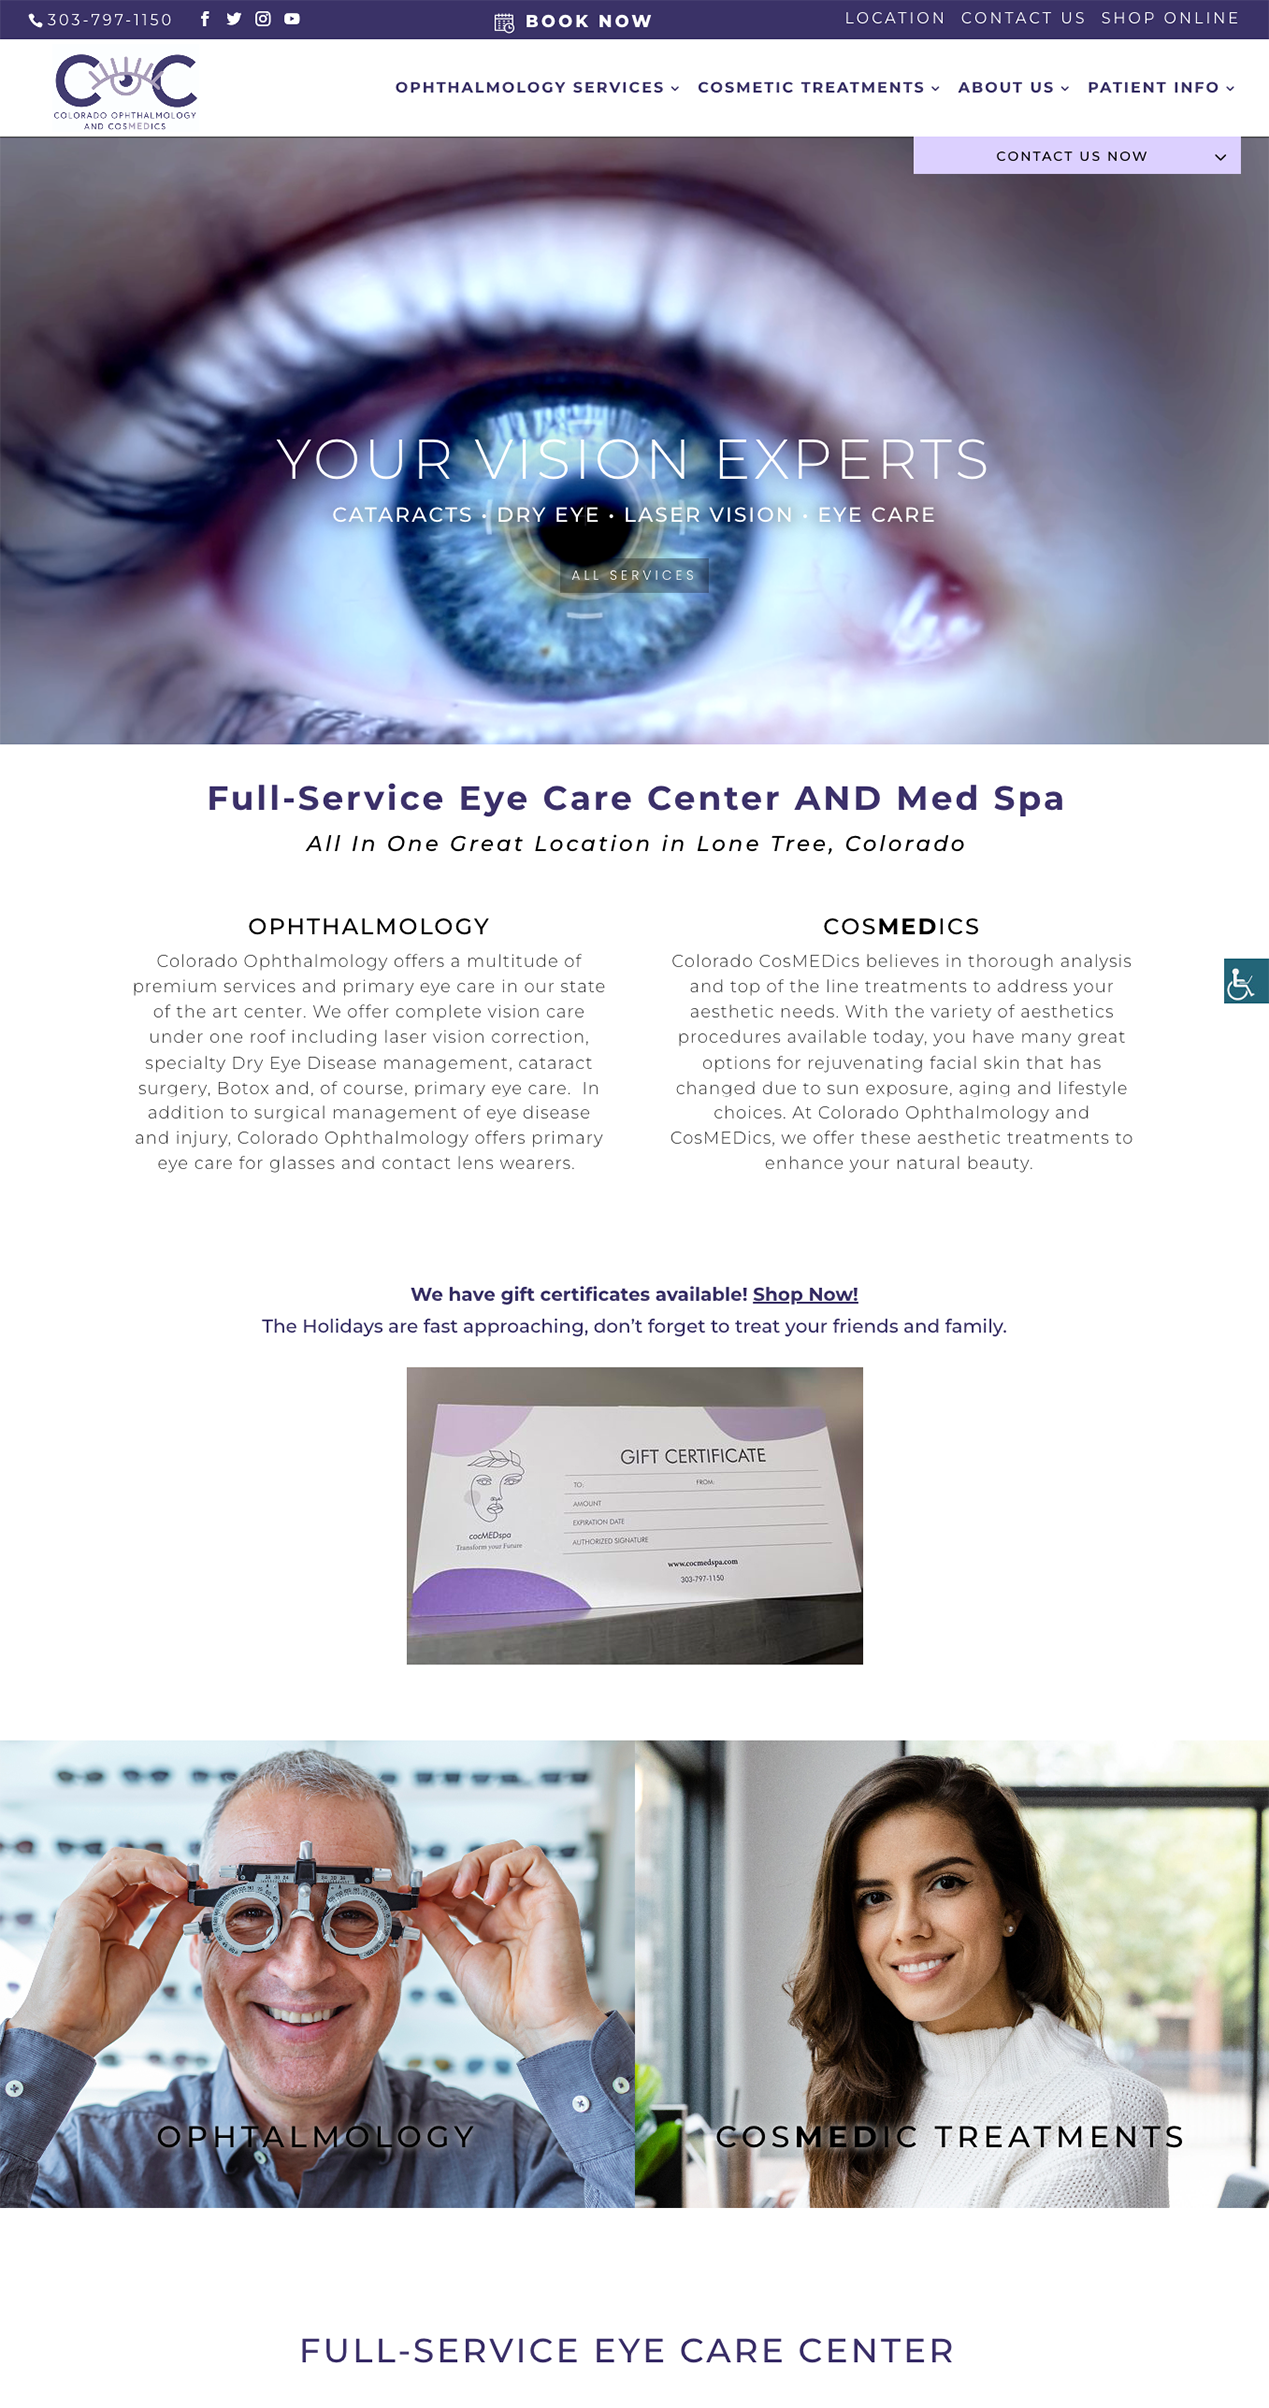 Colorado Ophthalmology & CosMEDics by Kane Design